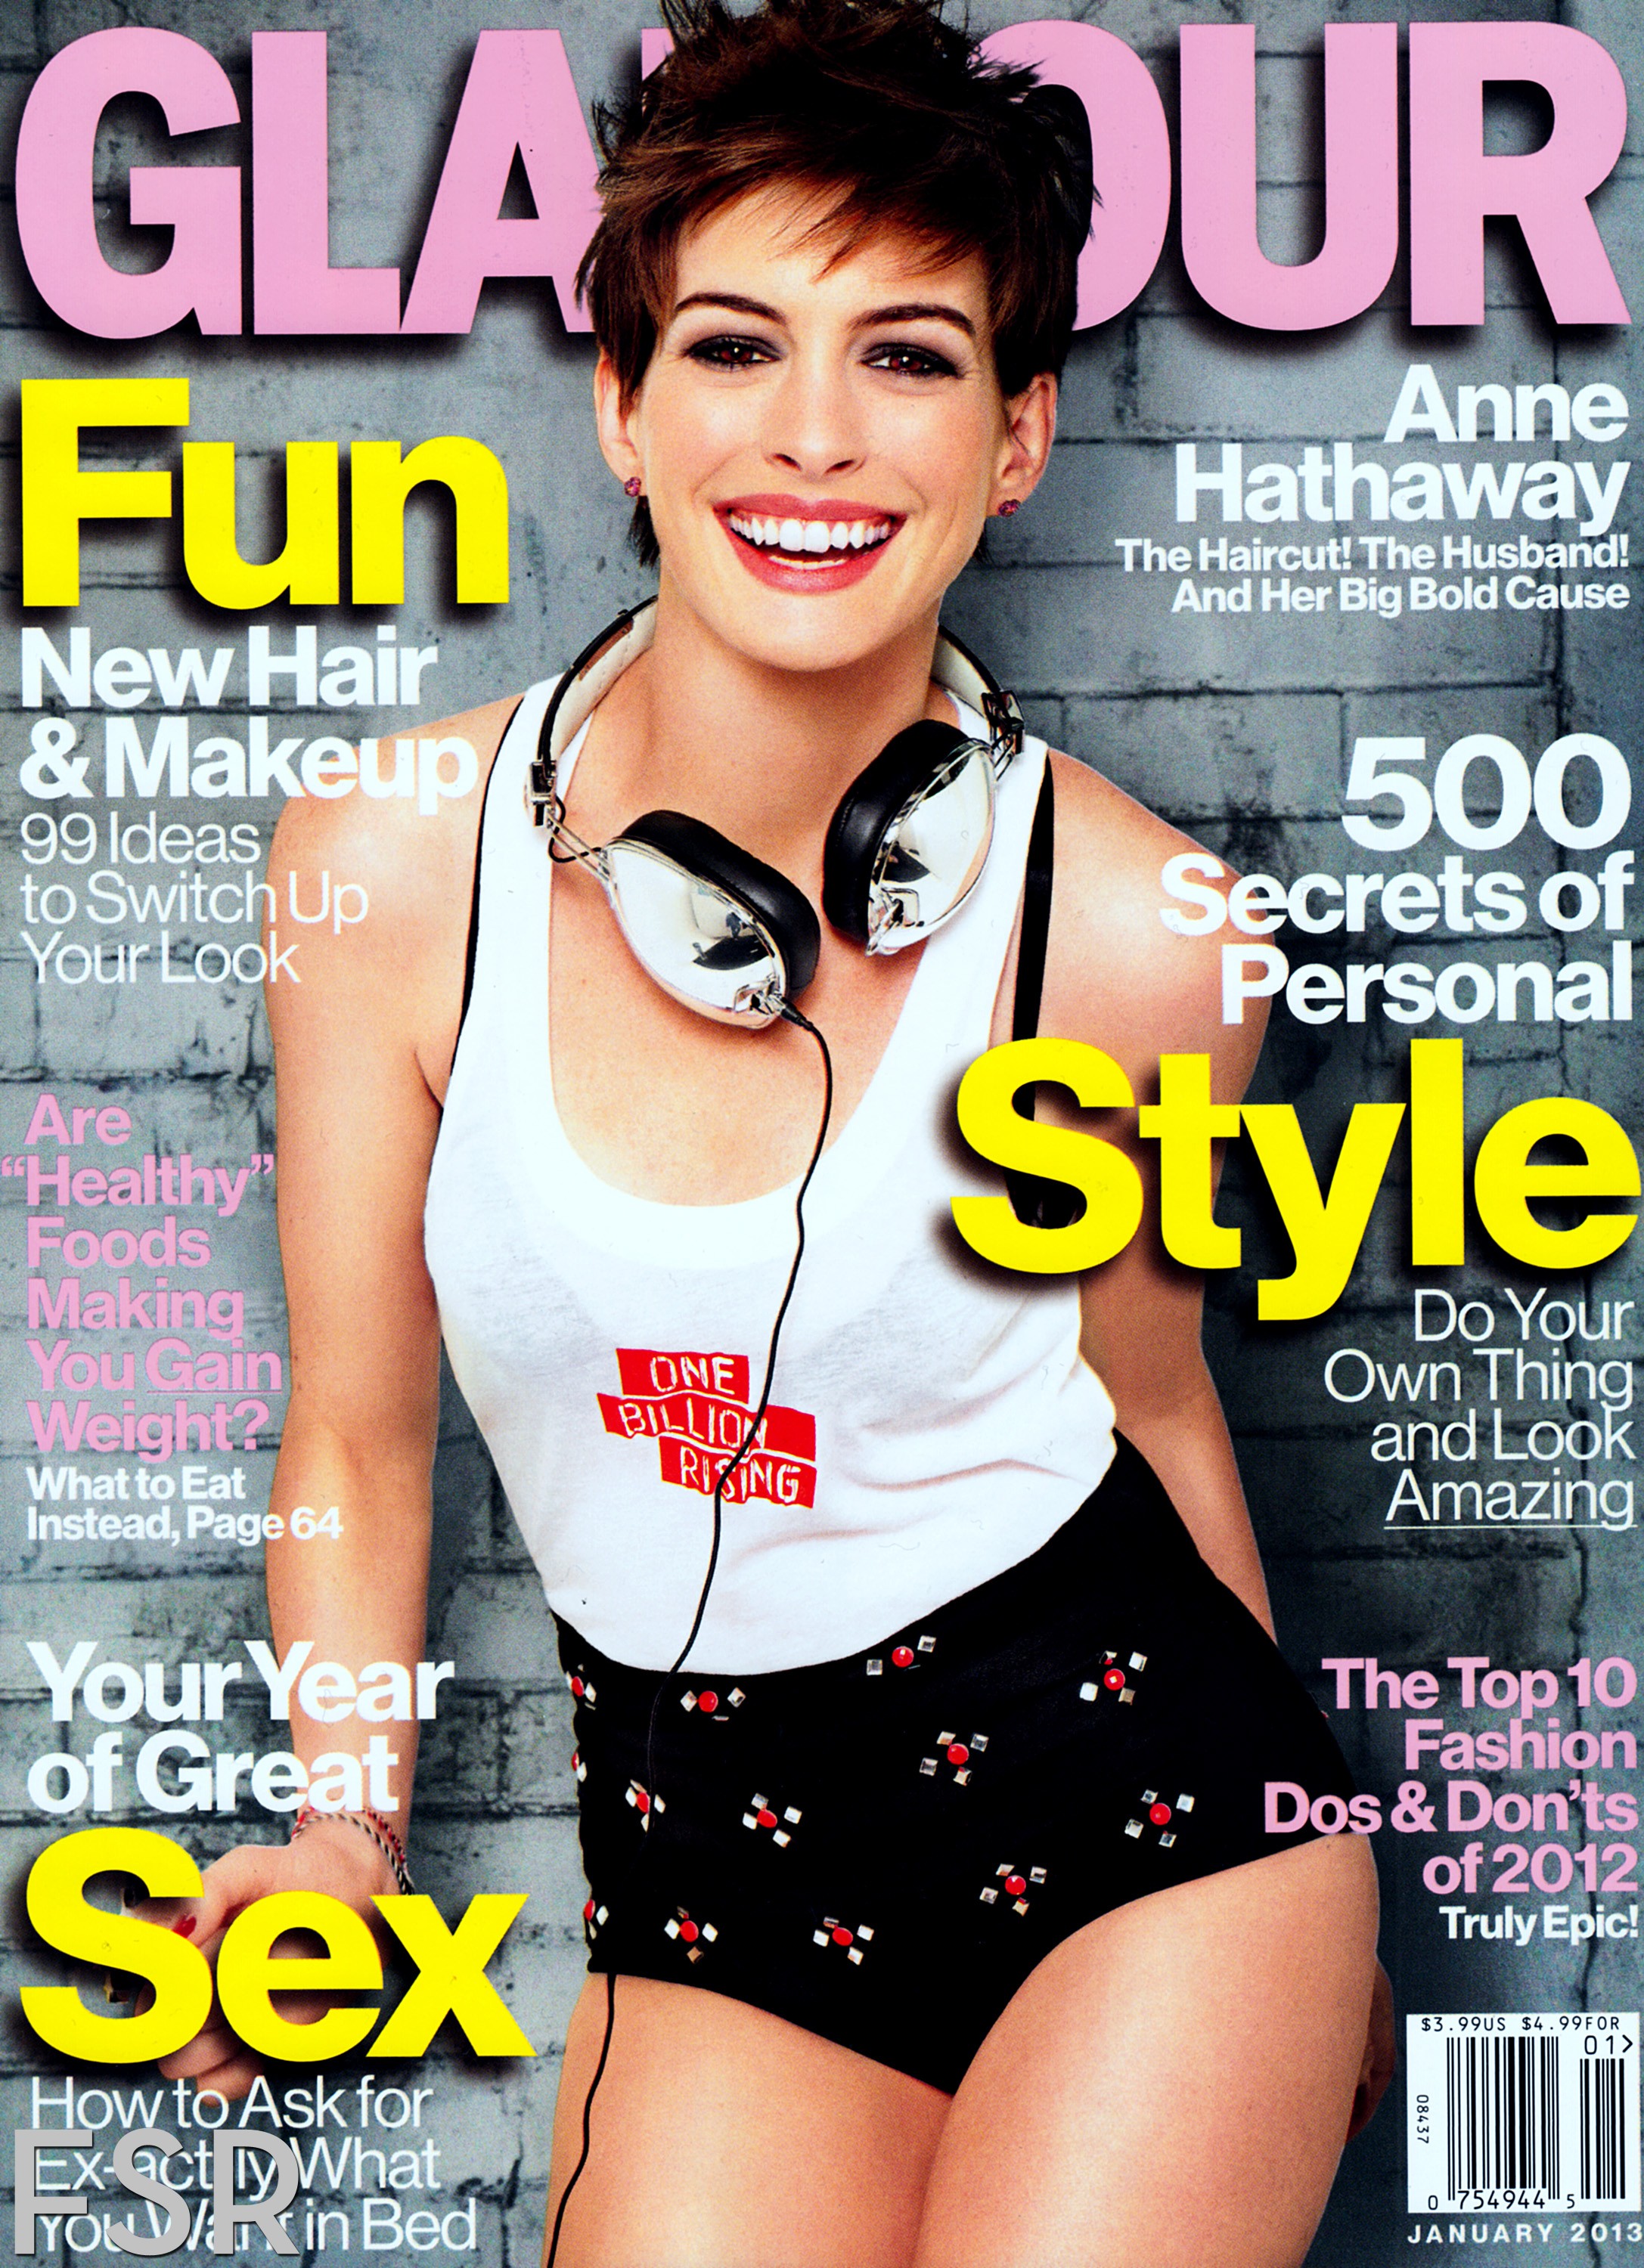 Us magazine. Энн Хэтэуэй обложка журнала. Энн Хэтэуэй для журнала. Энн Хэтэуэй обложка гламур. Обложка для журнала.